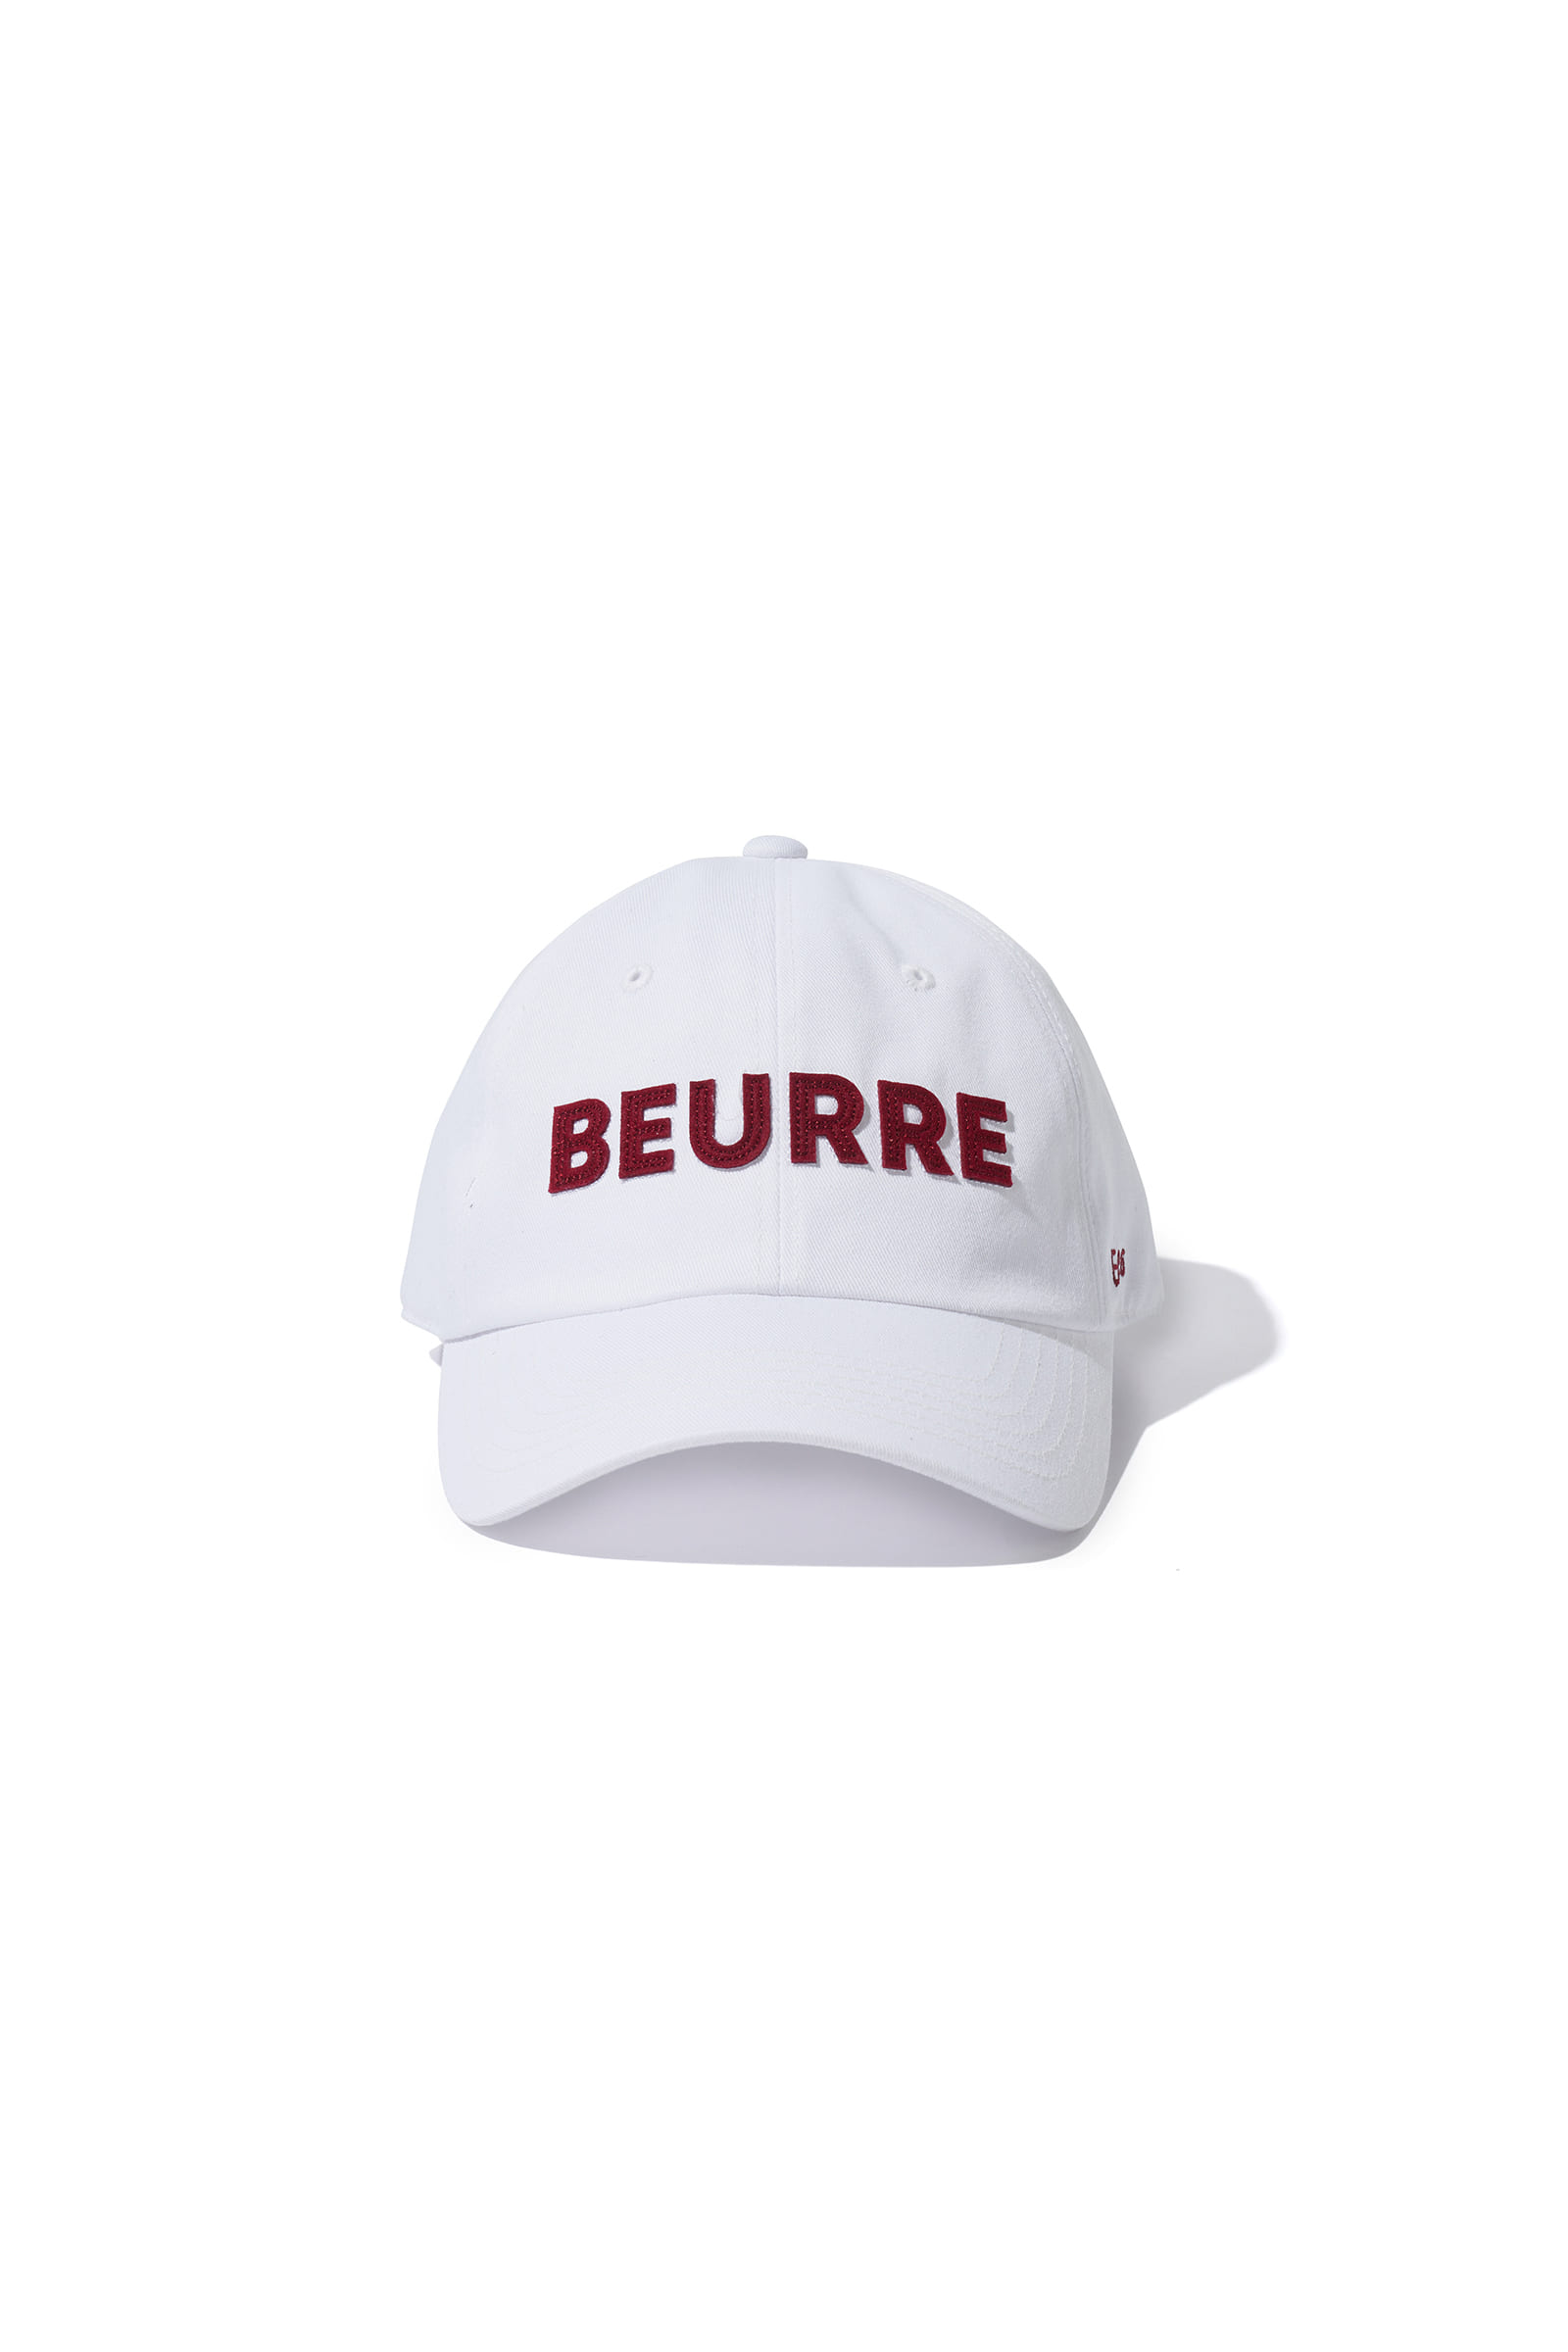 ep.6  BEURRE applique patch ballcap (White/Burgundy)